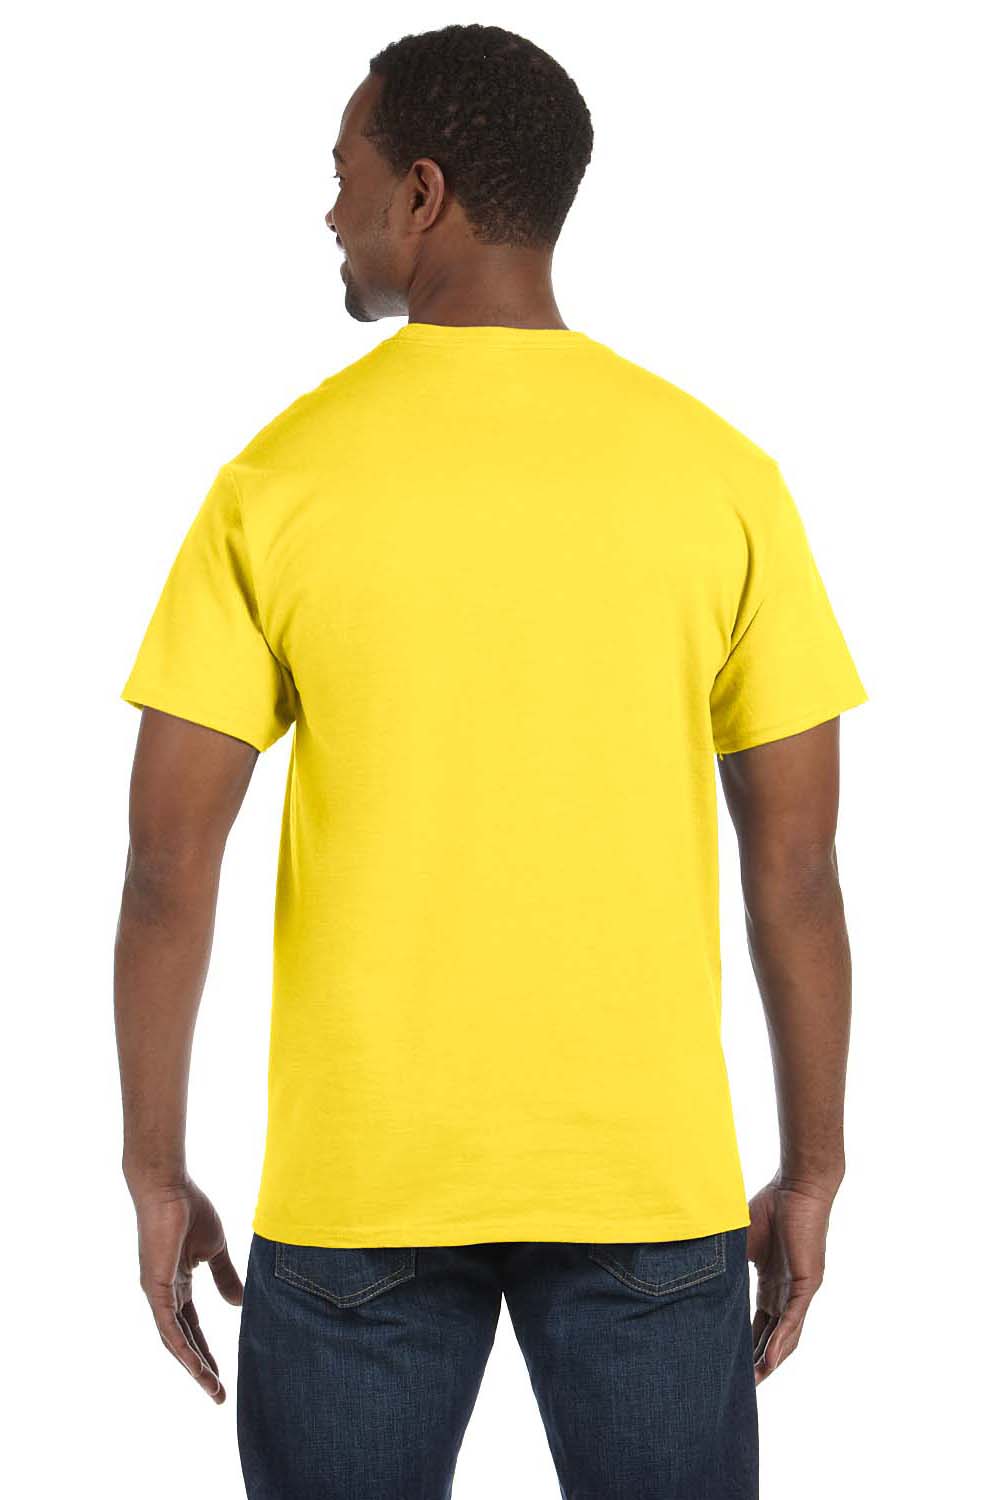 Hanes 5250T Mens ComfortSoft Short Sleeve Crewneck T-Shirt Yellow Back